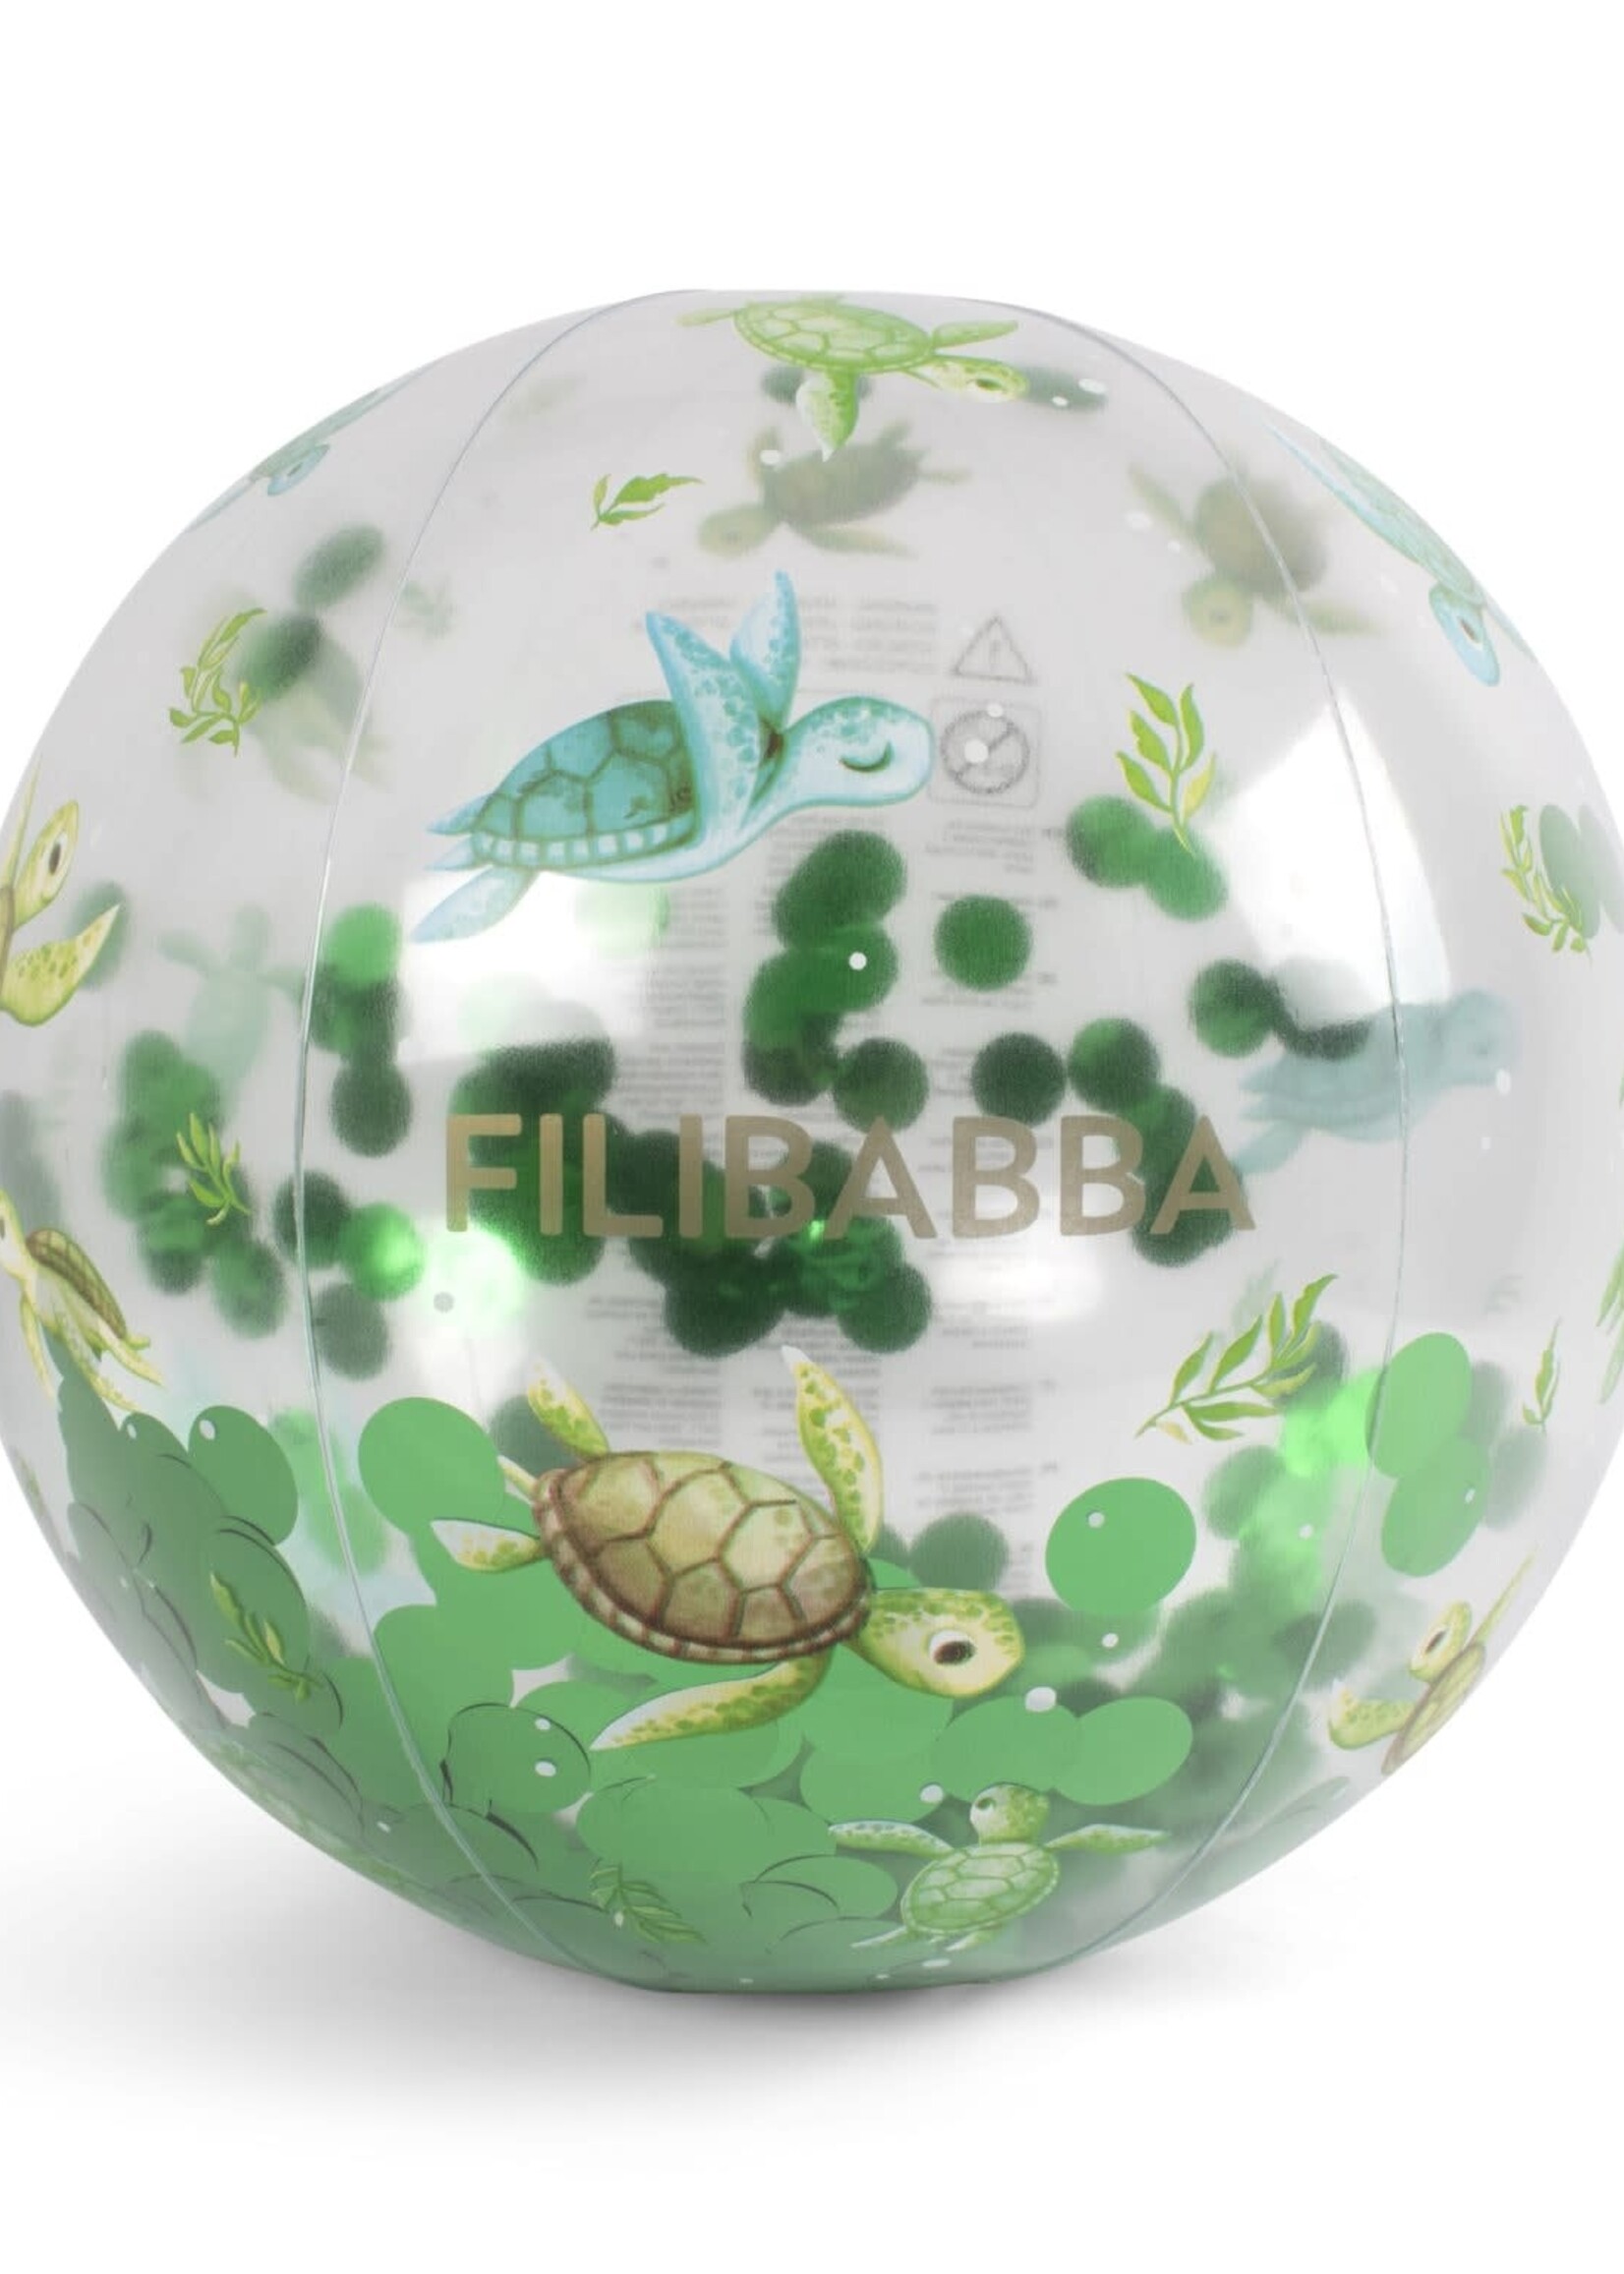 Filababba Filababba - beach ball confetti zeeschildpad